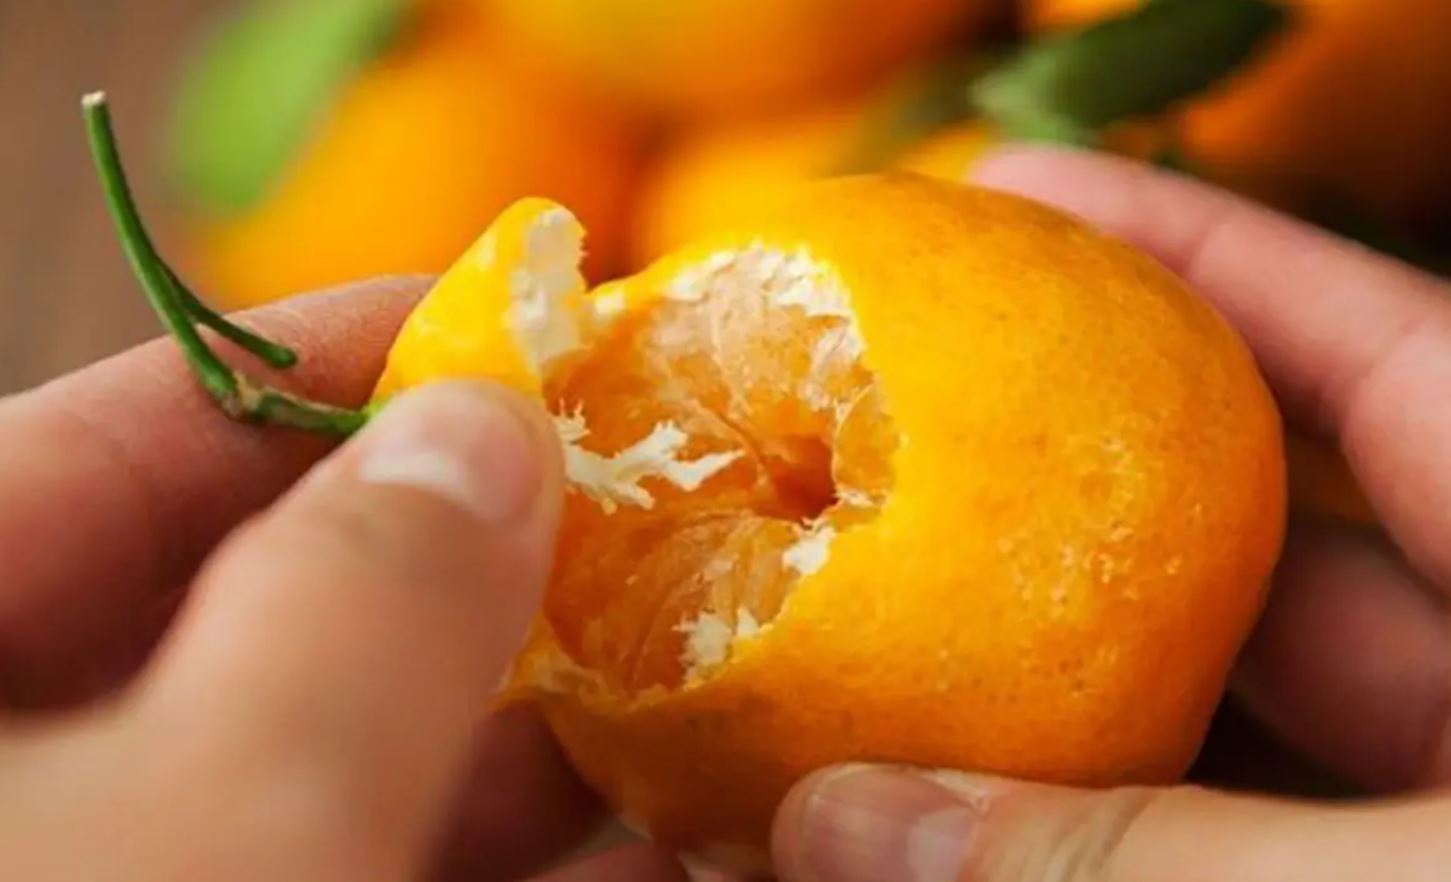 Bucce di mandarino